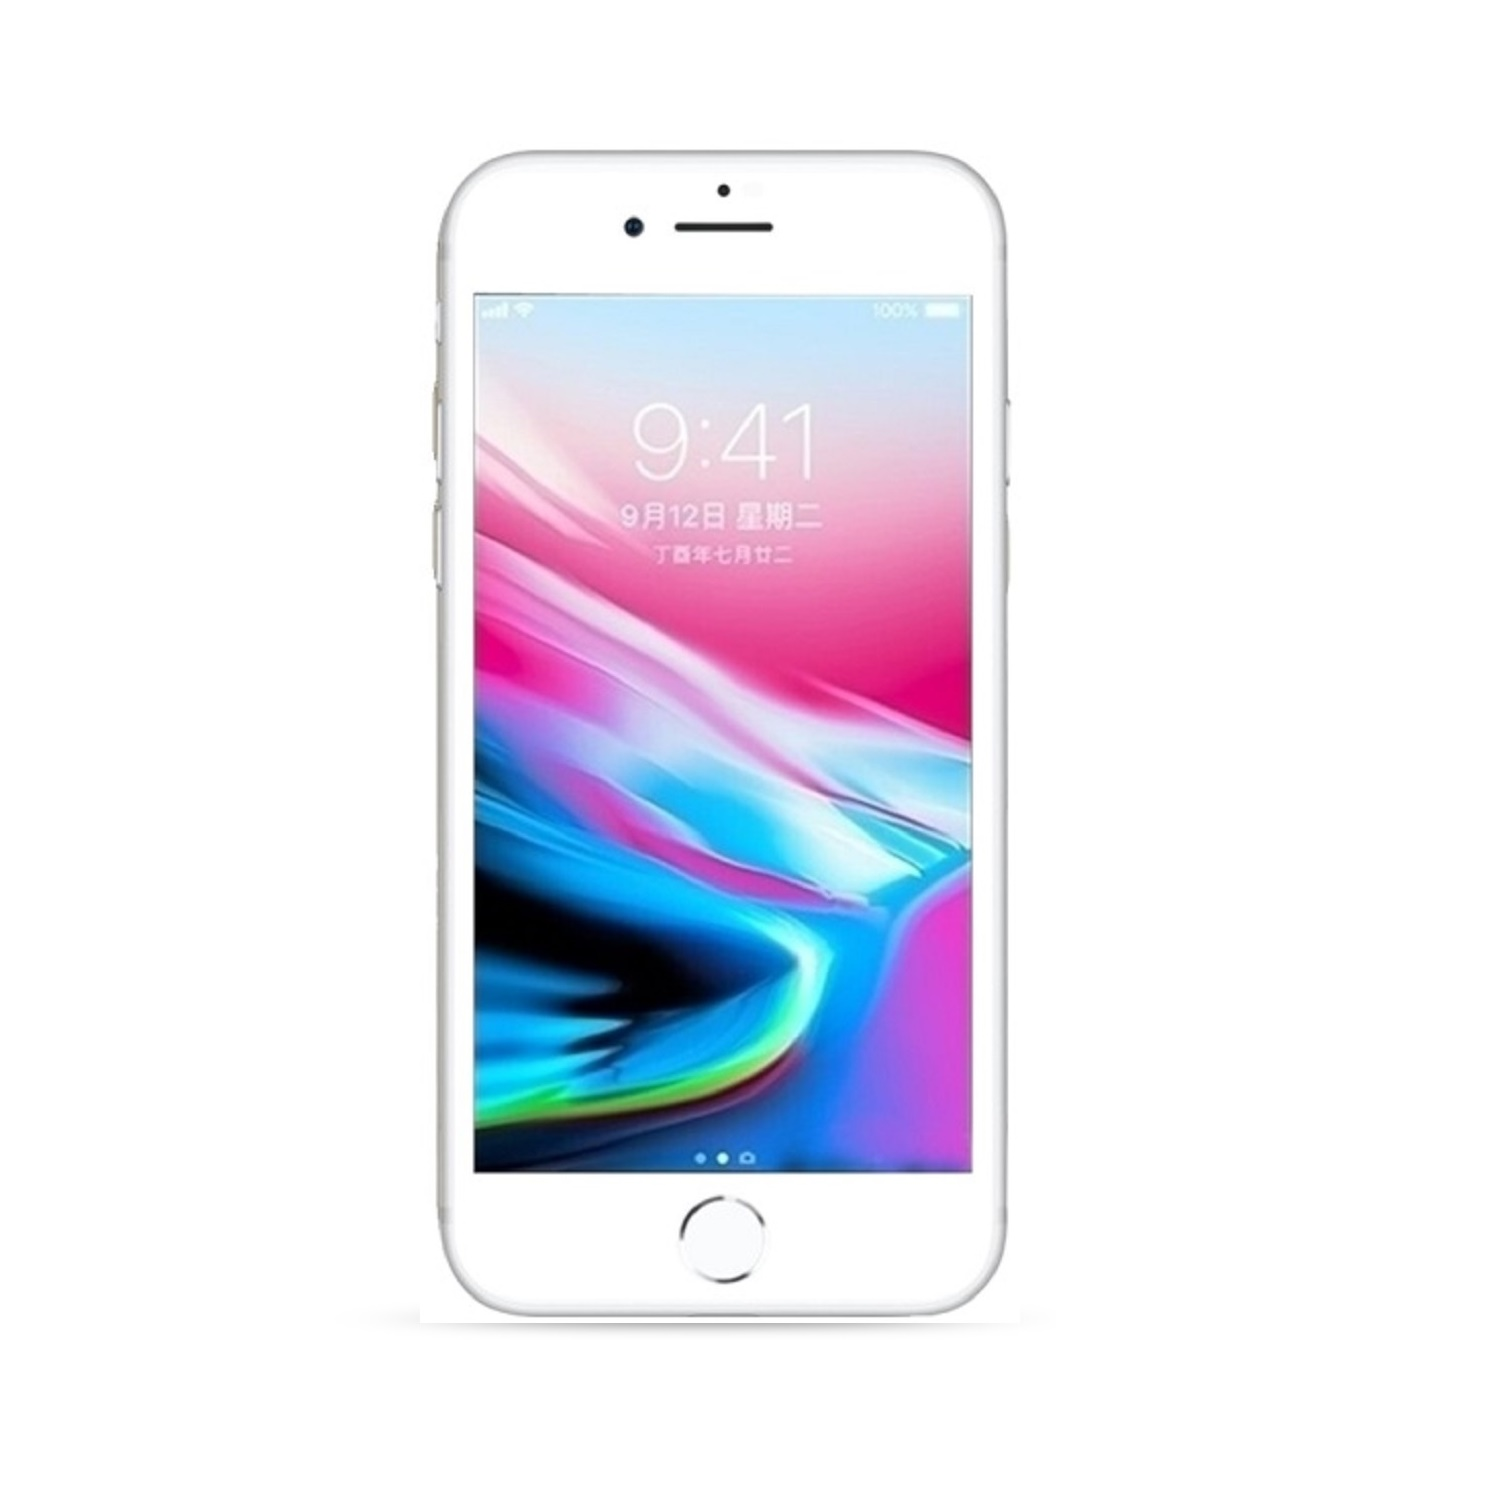 9H 8 iPhone Displayschutzfolie(für Schutzglas 6x FULL HD Plus) COVER KLAR Hartglas Apple PROTECTORKING